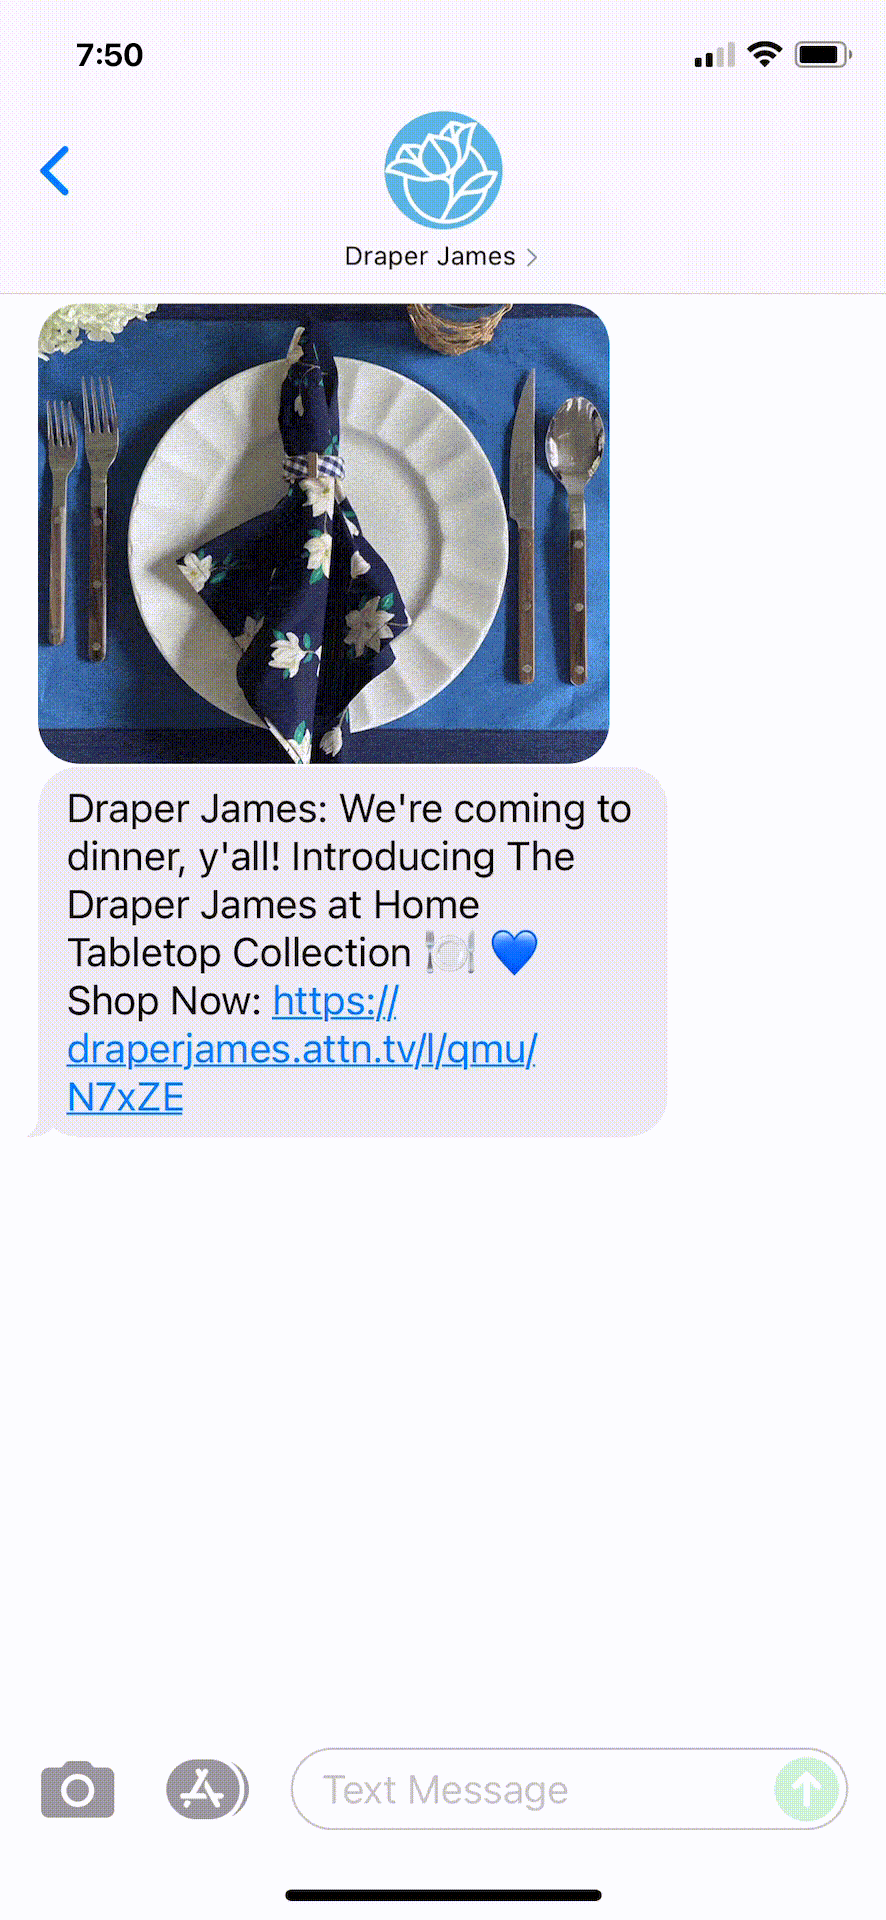 Draper-James-Text-Message-Marketing-Example-08.15.2021